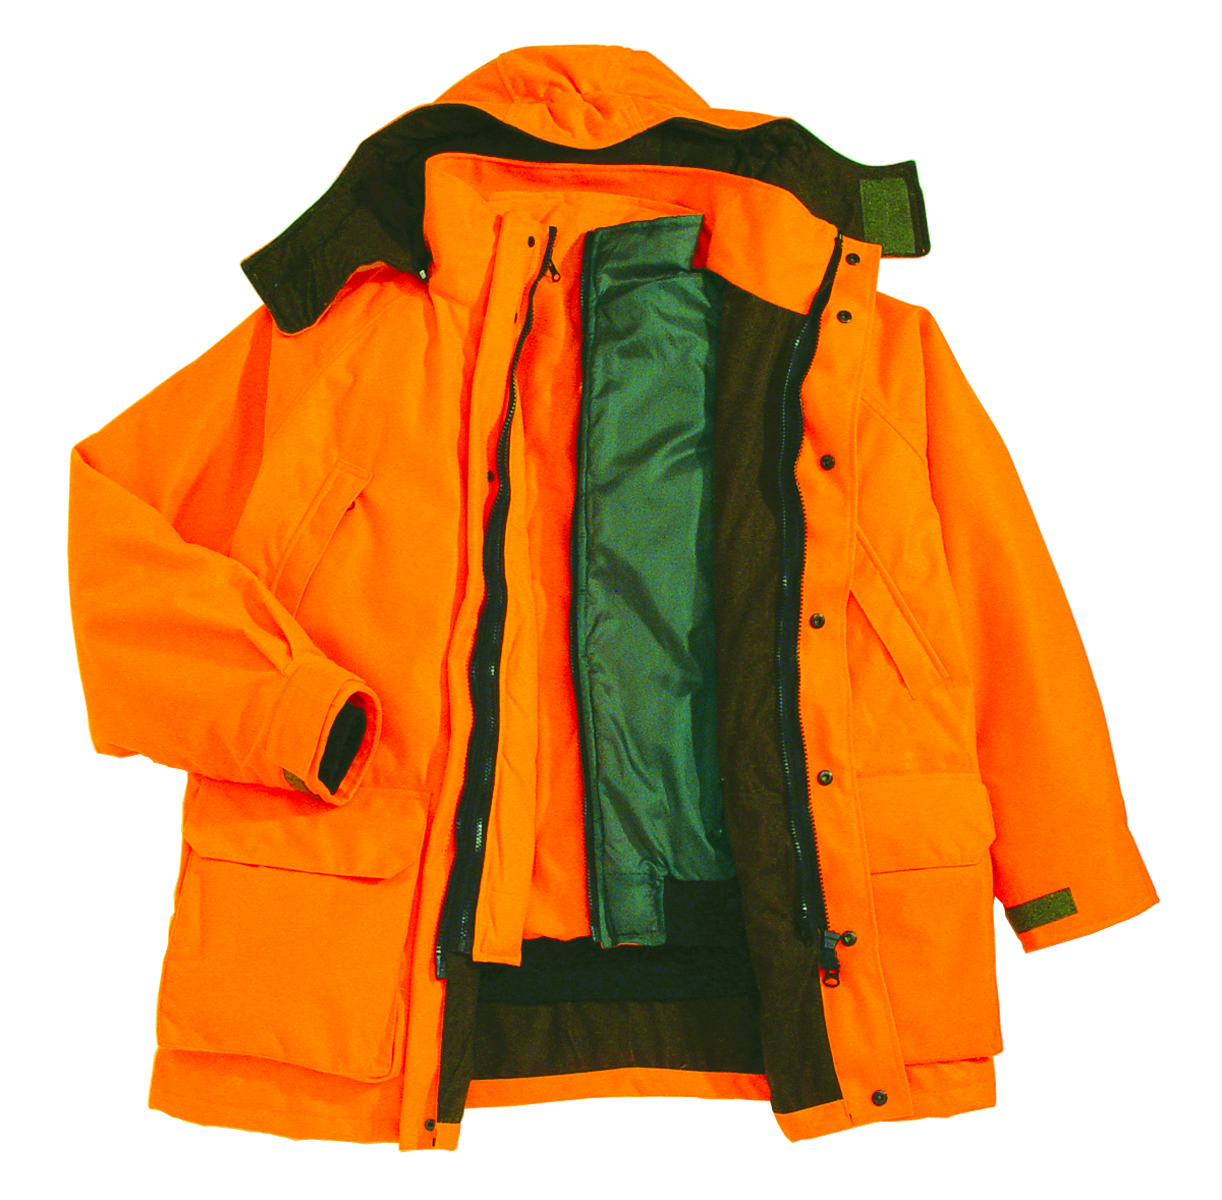 Hunting blaze safety heavy winter apparel jacket - CG Emery